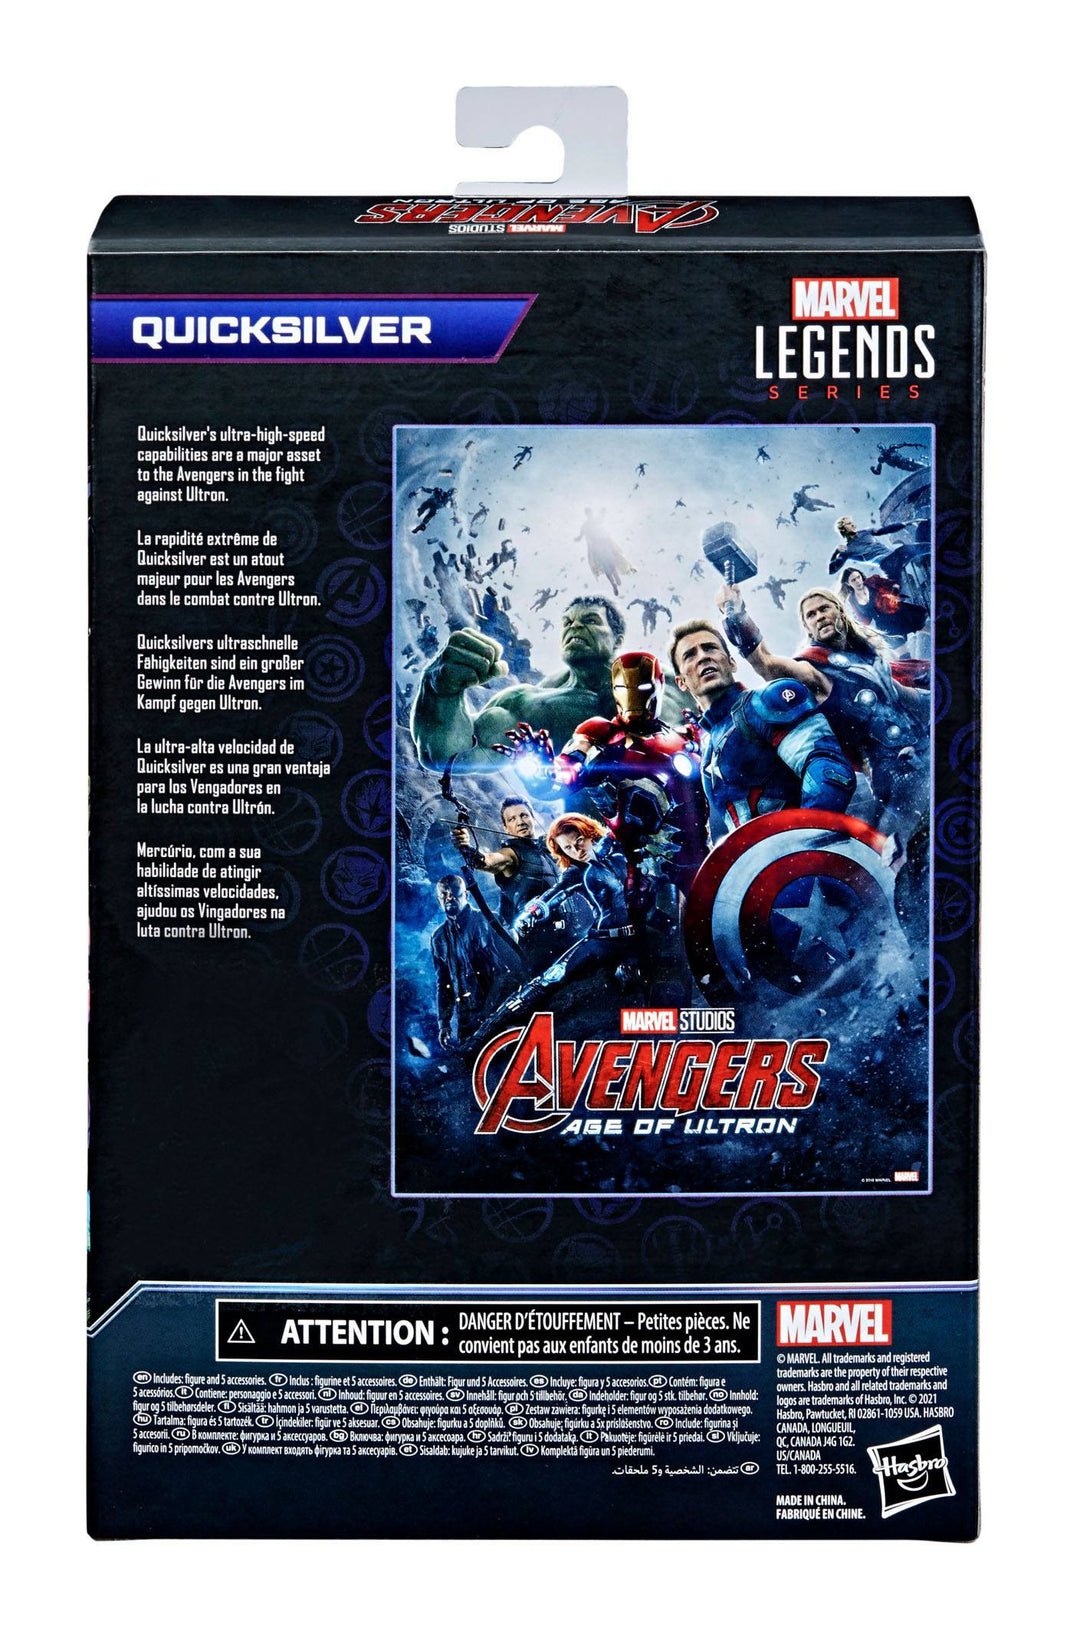 Marvel Legends Series Infinity Saga Quicksilver Action Figure